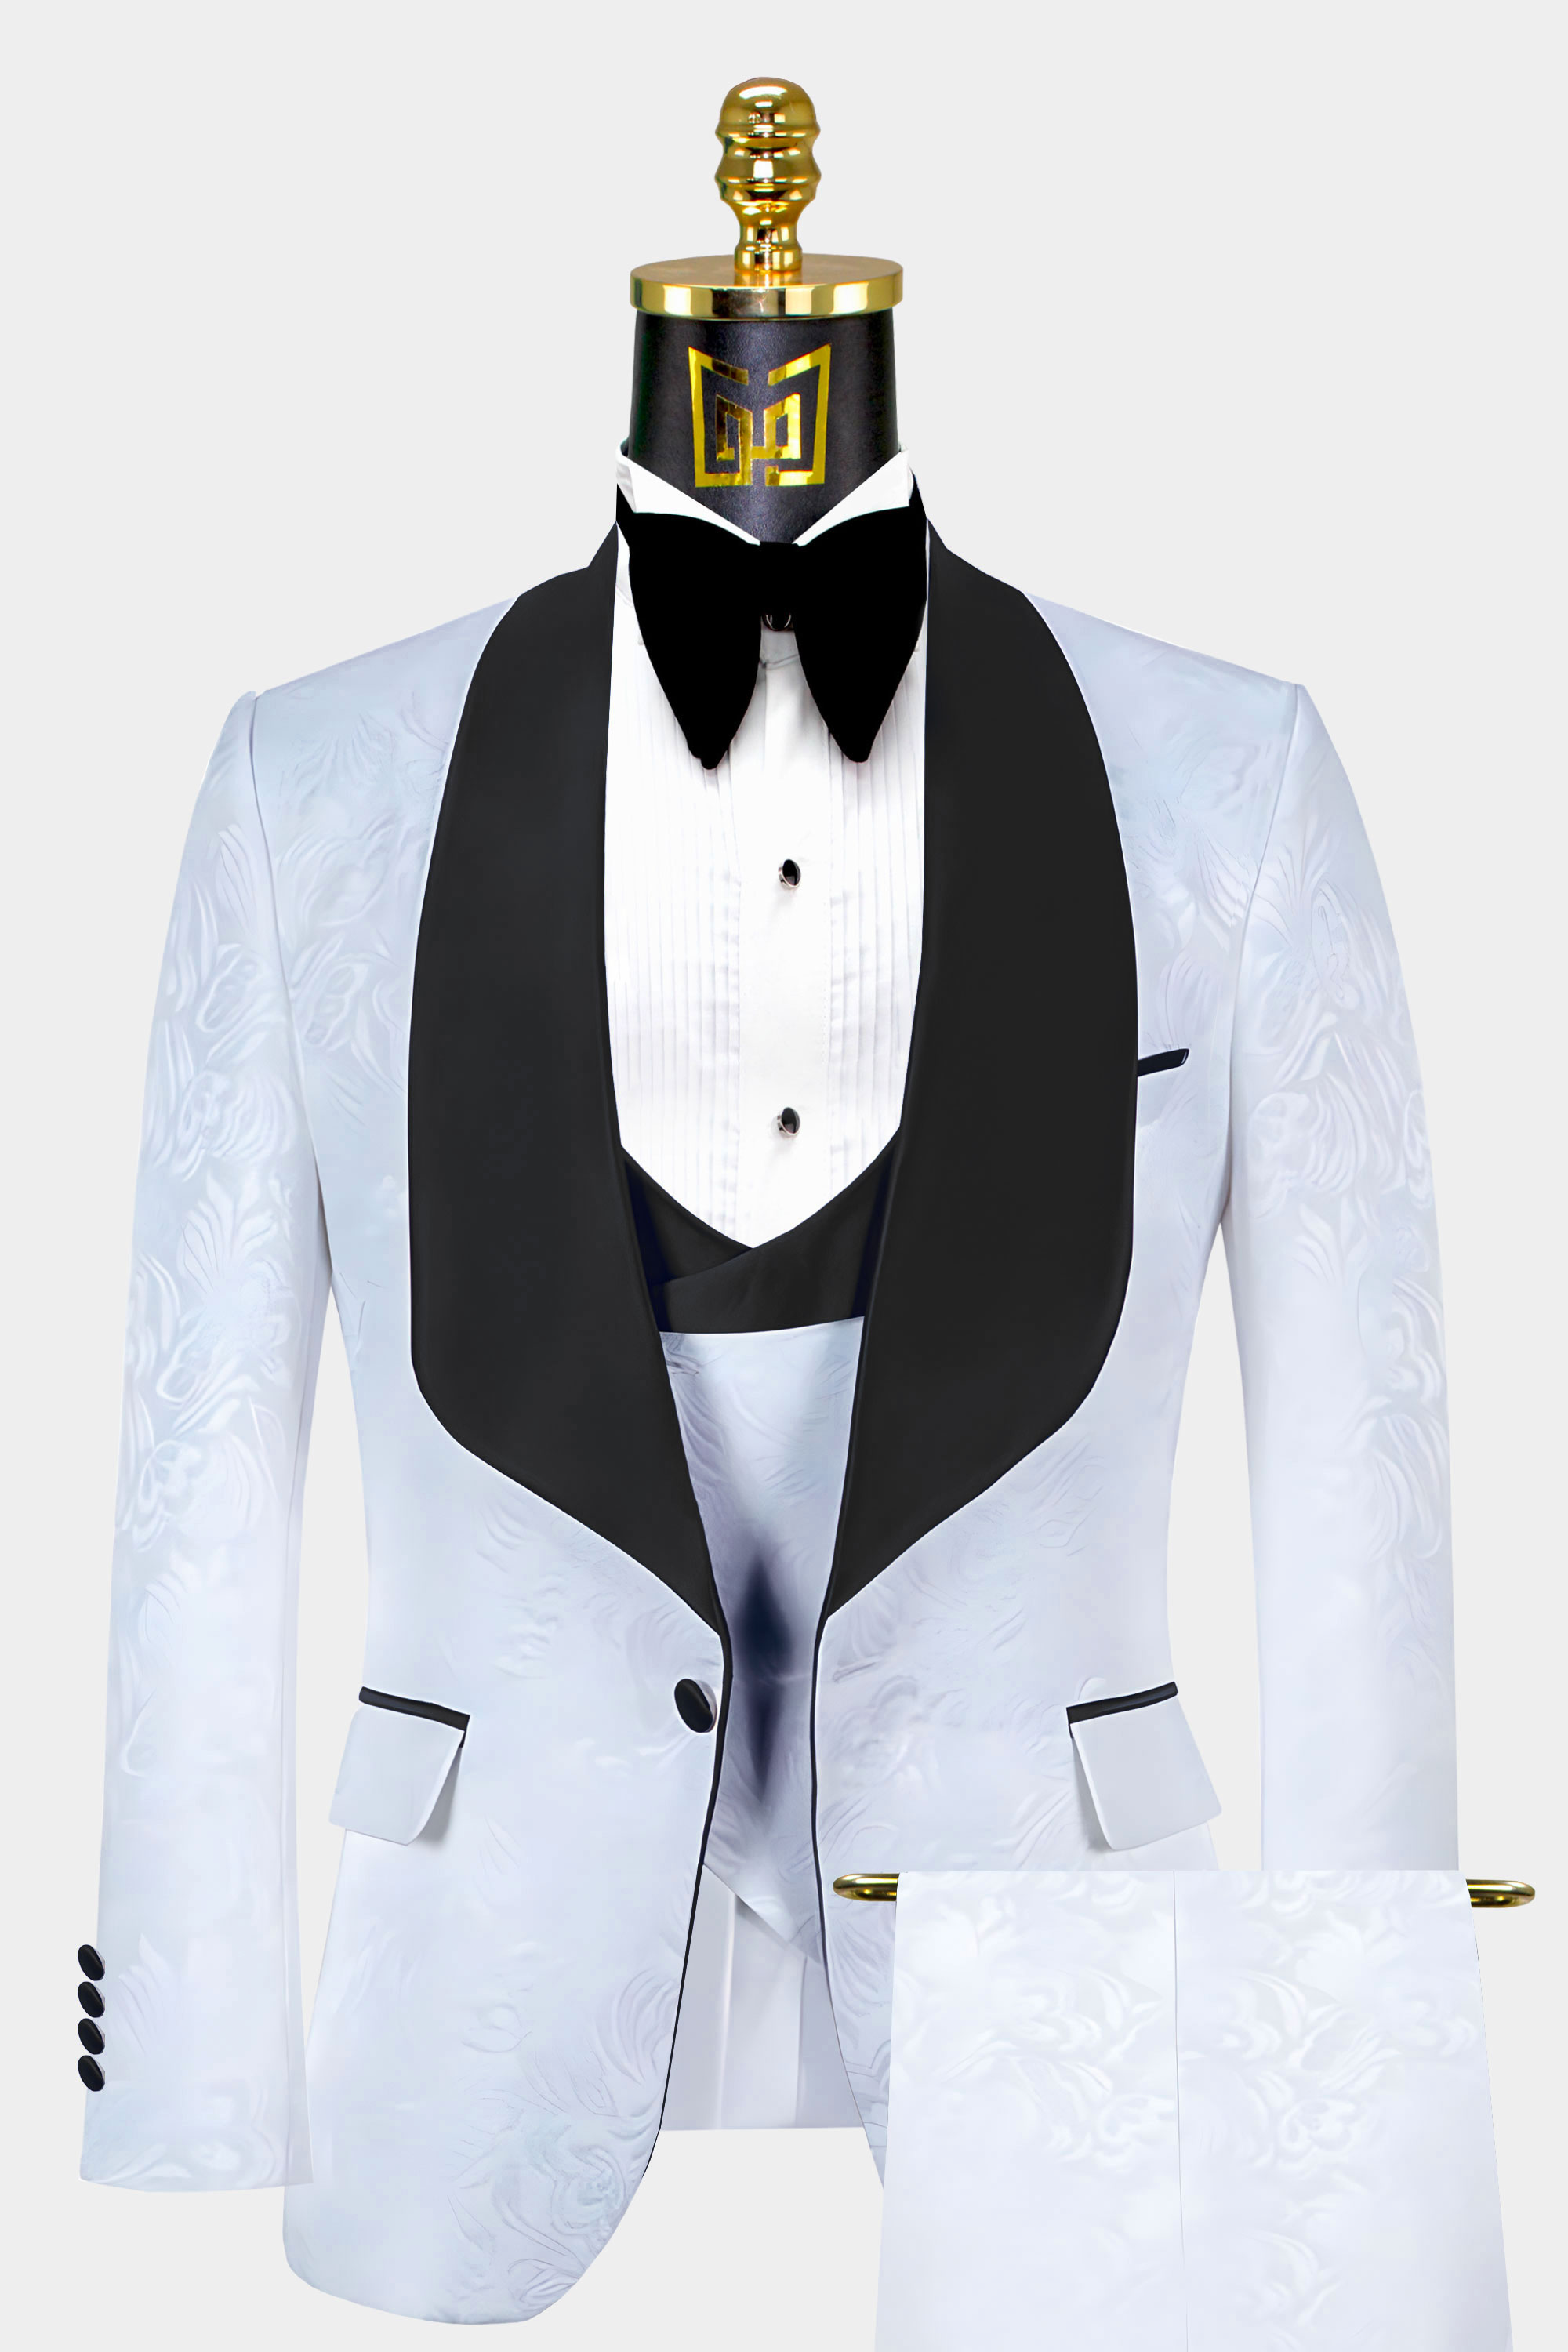 White and Black Tuxedo Suit | Gentleman's Guru